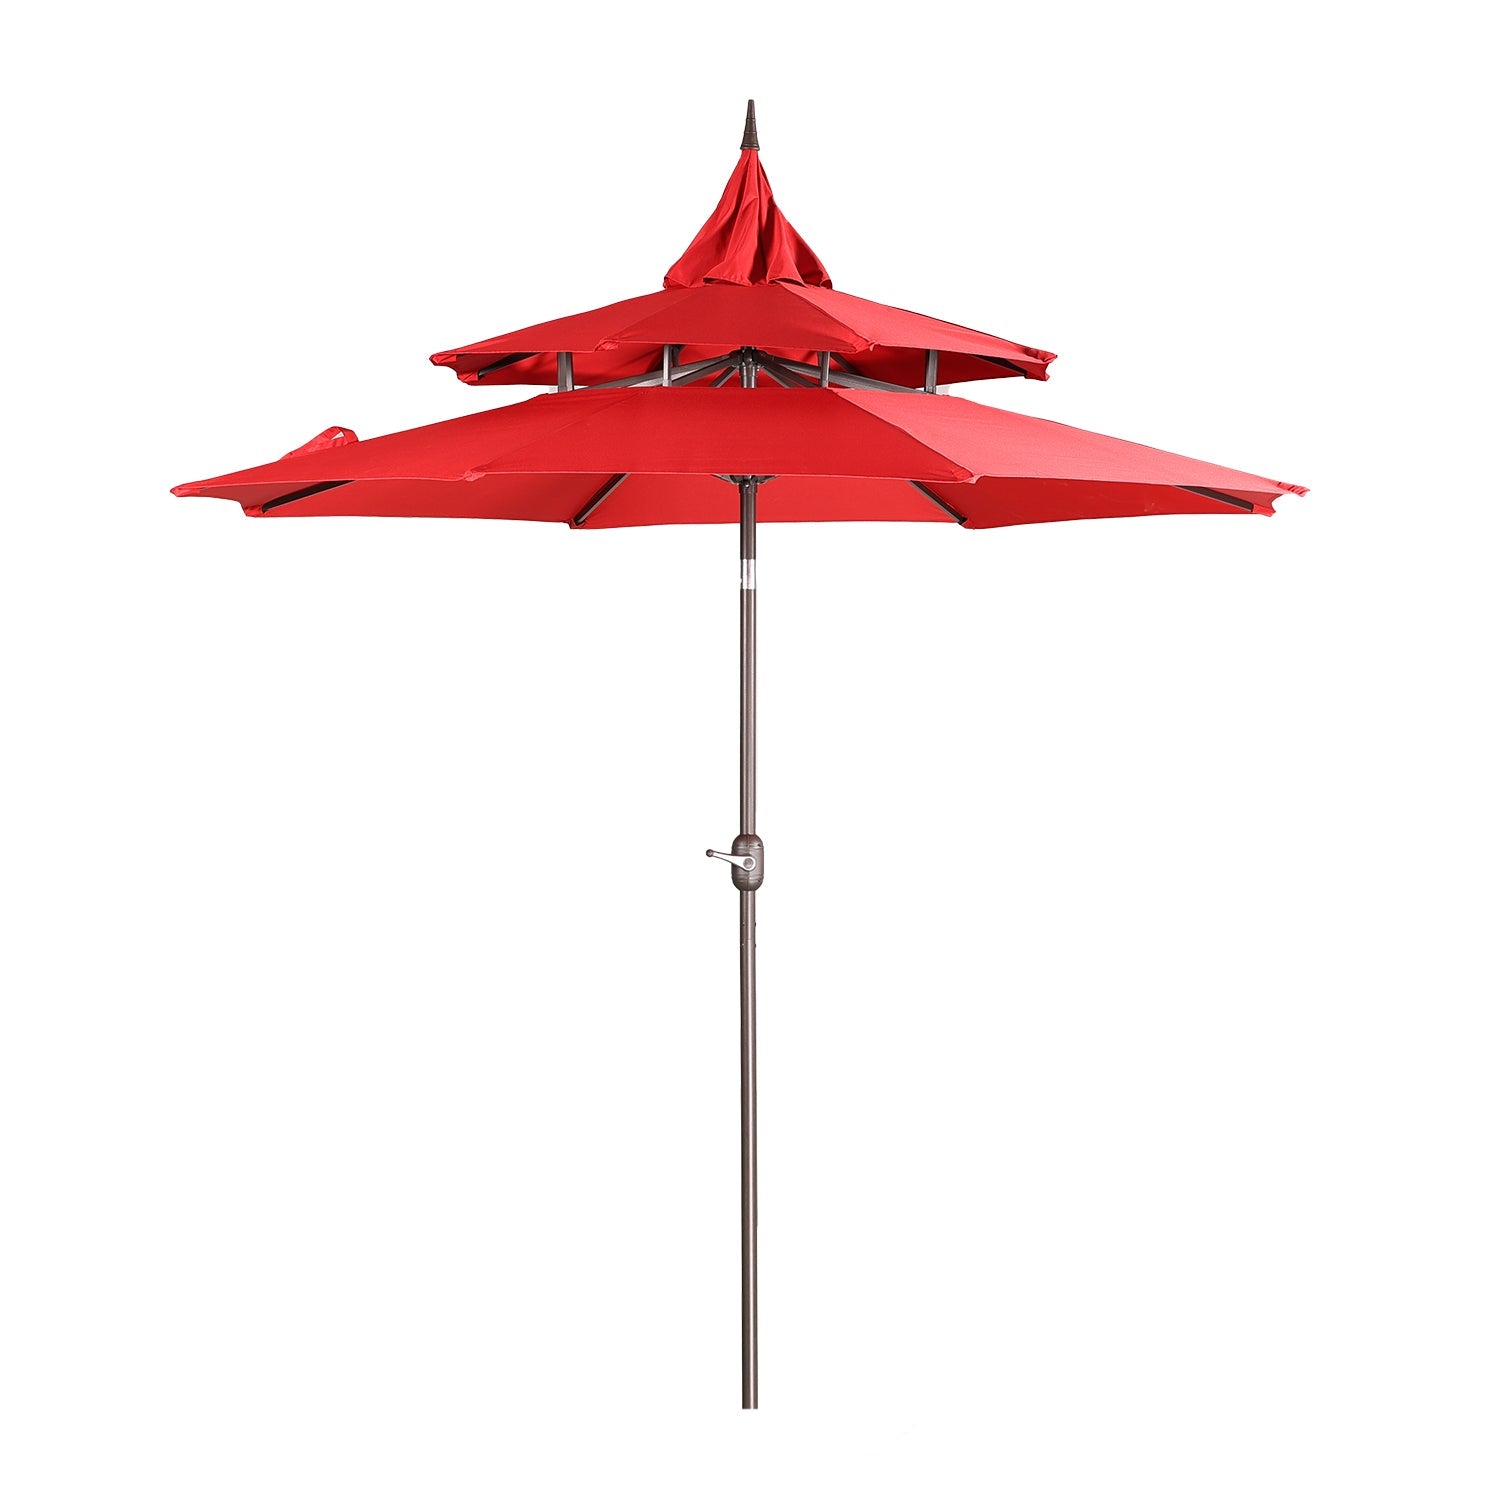 9FT 3-Tier Patio Umbrella with Crank Lift - Outdoor Table Umbrella - Sun Protection with 8 Ribs Patio Umbrella Aoodor LLC Wine Red  